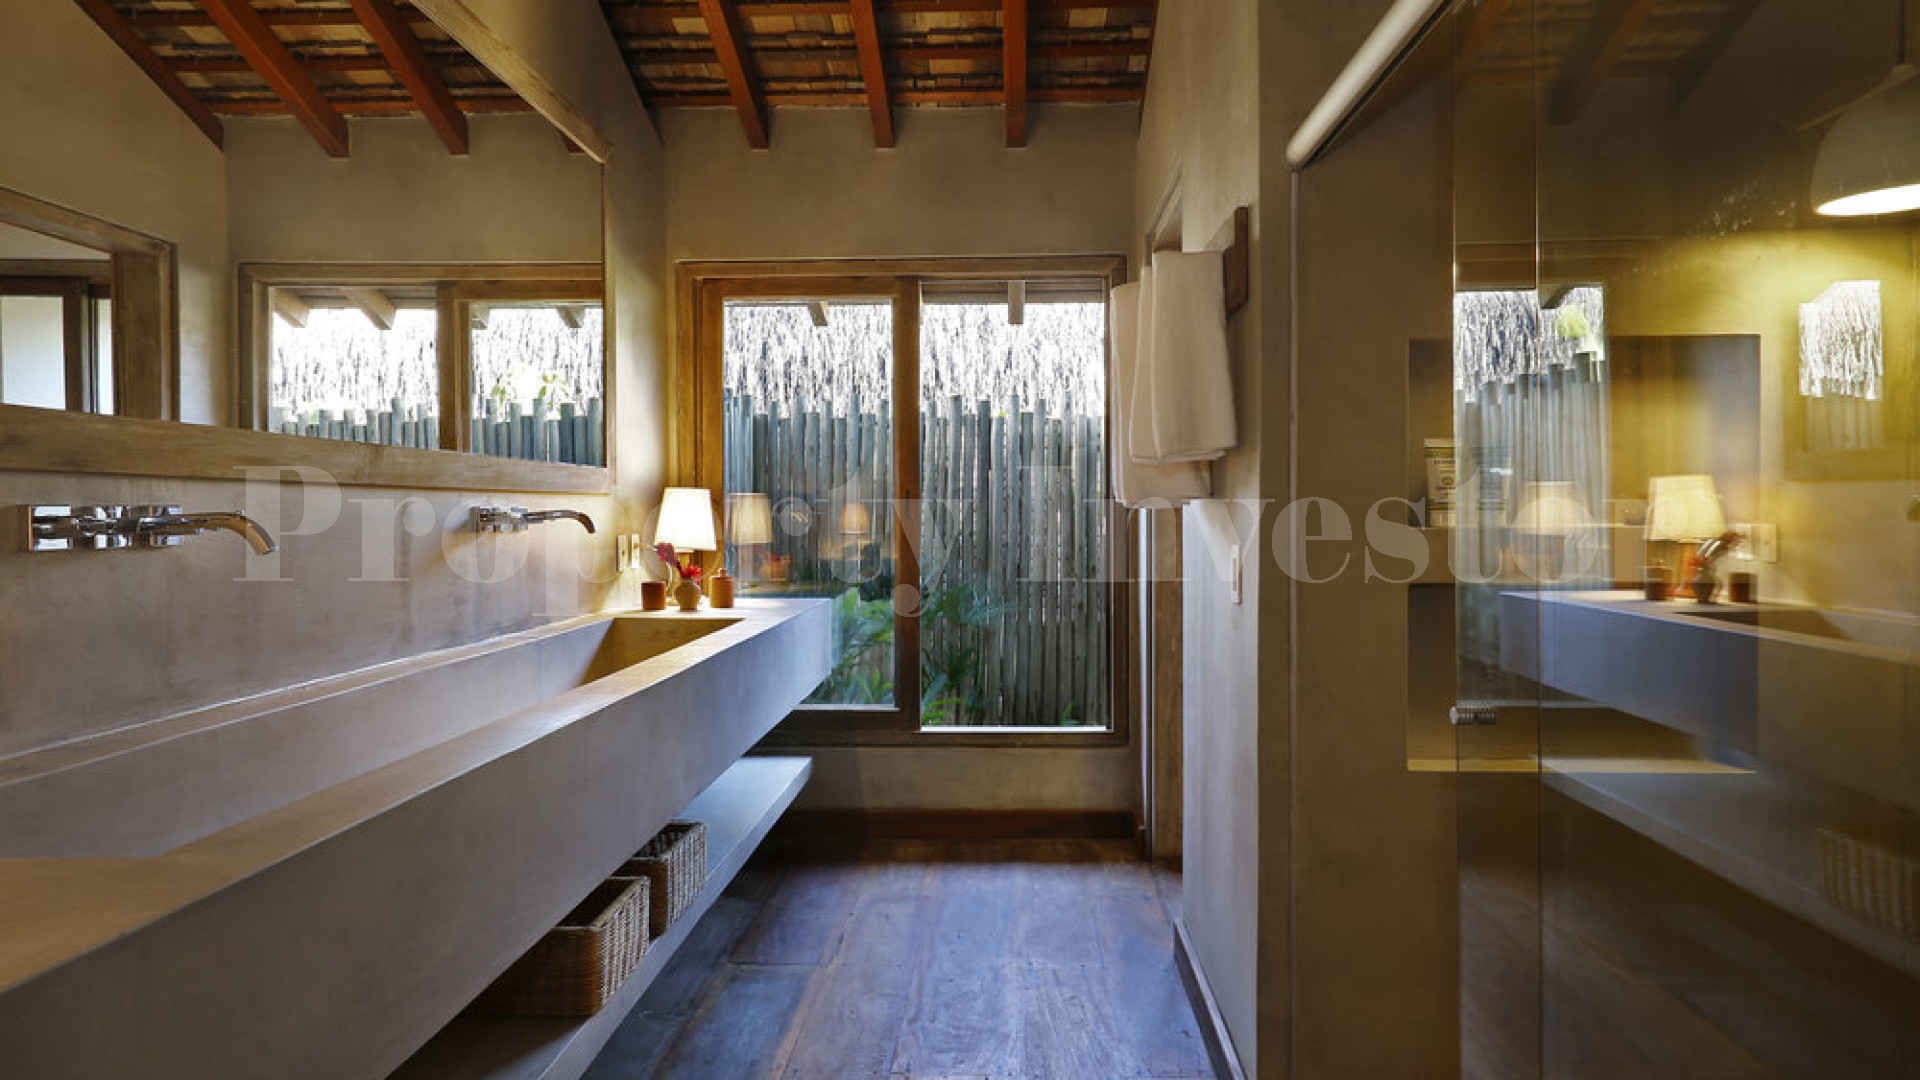 Beautiful 4 Bedroom Oceanfront Villa for Sale in Trancoso, Brazil